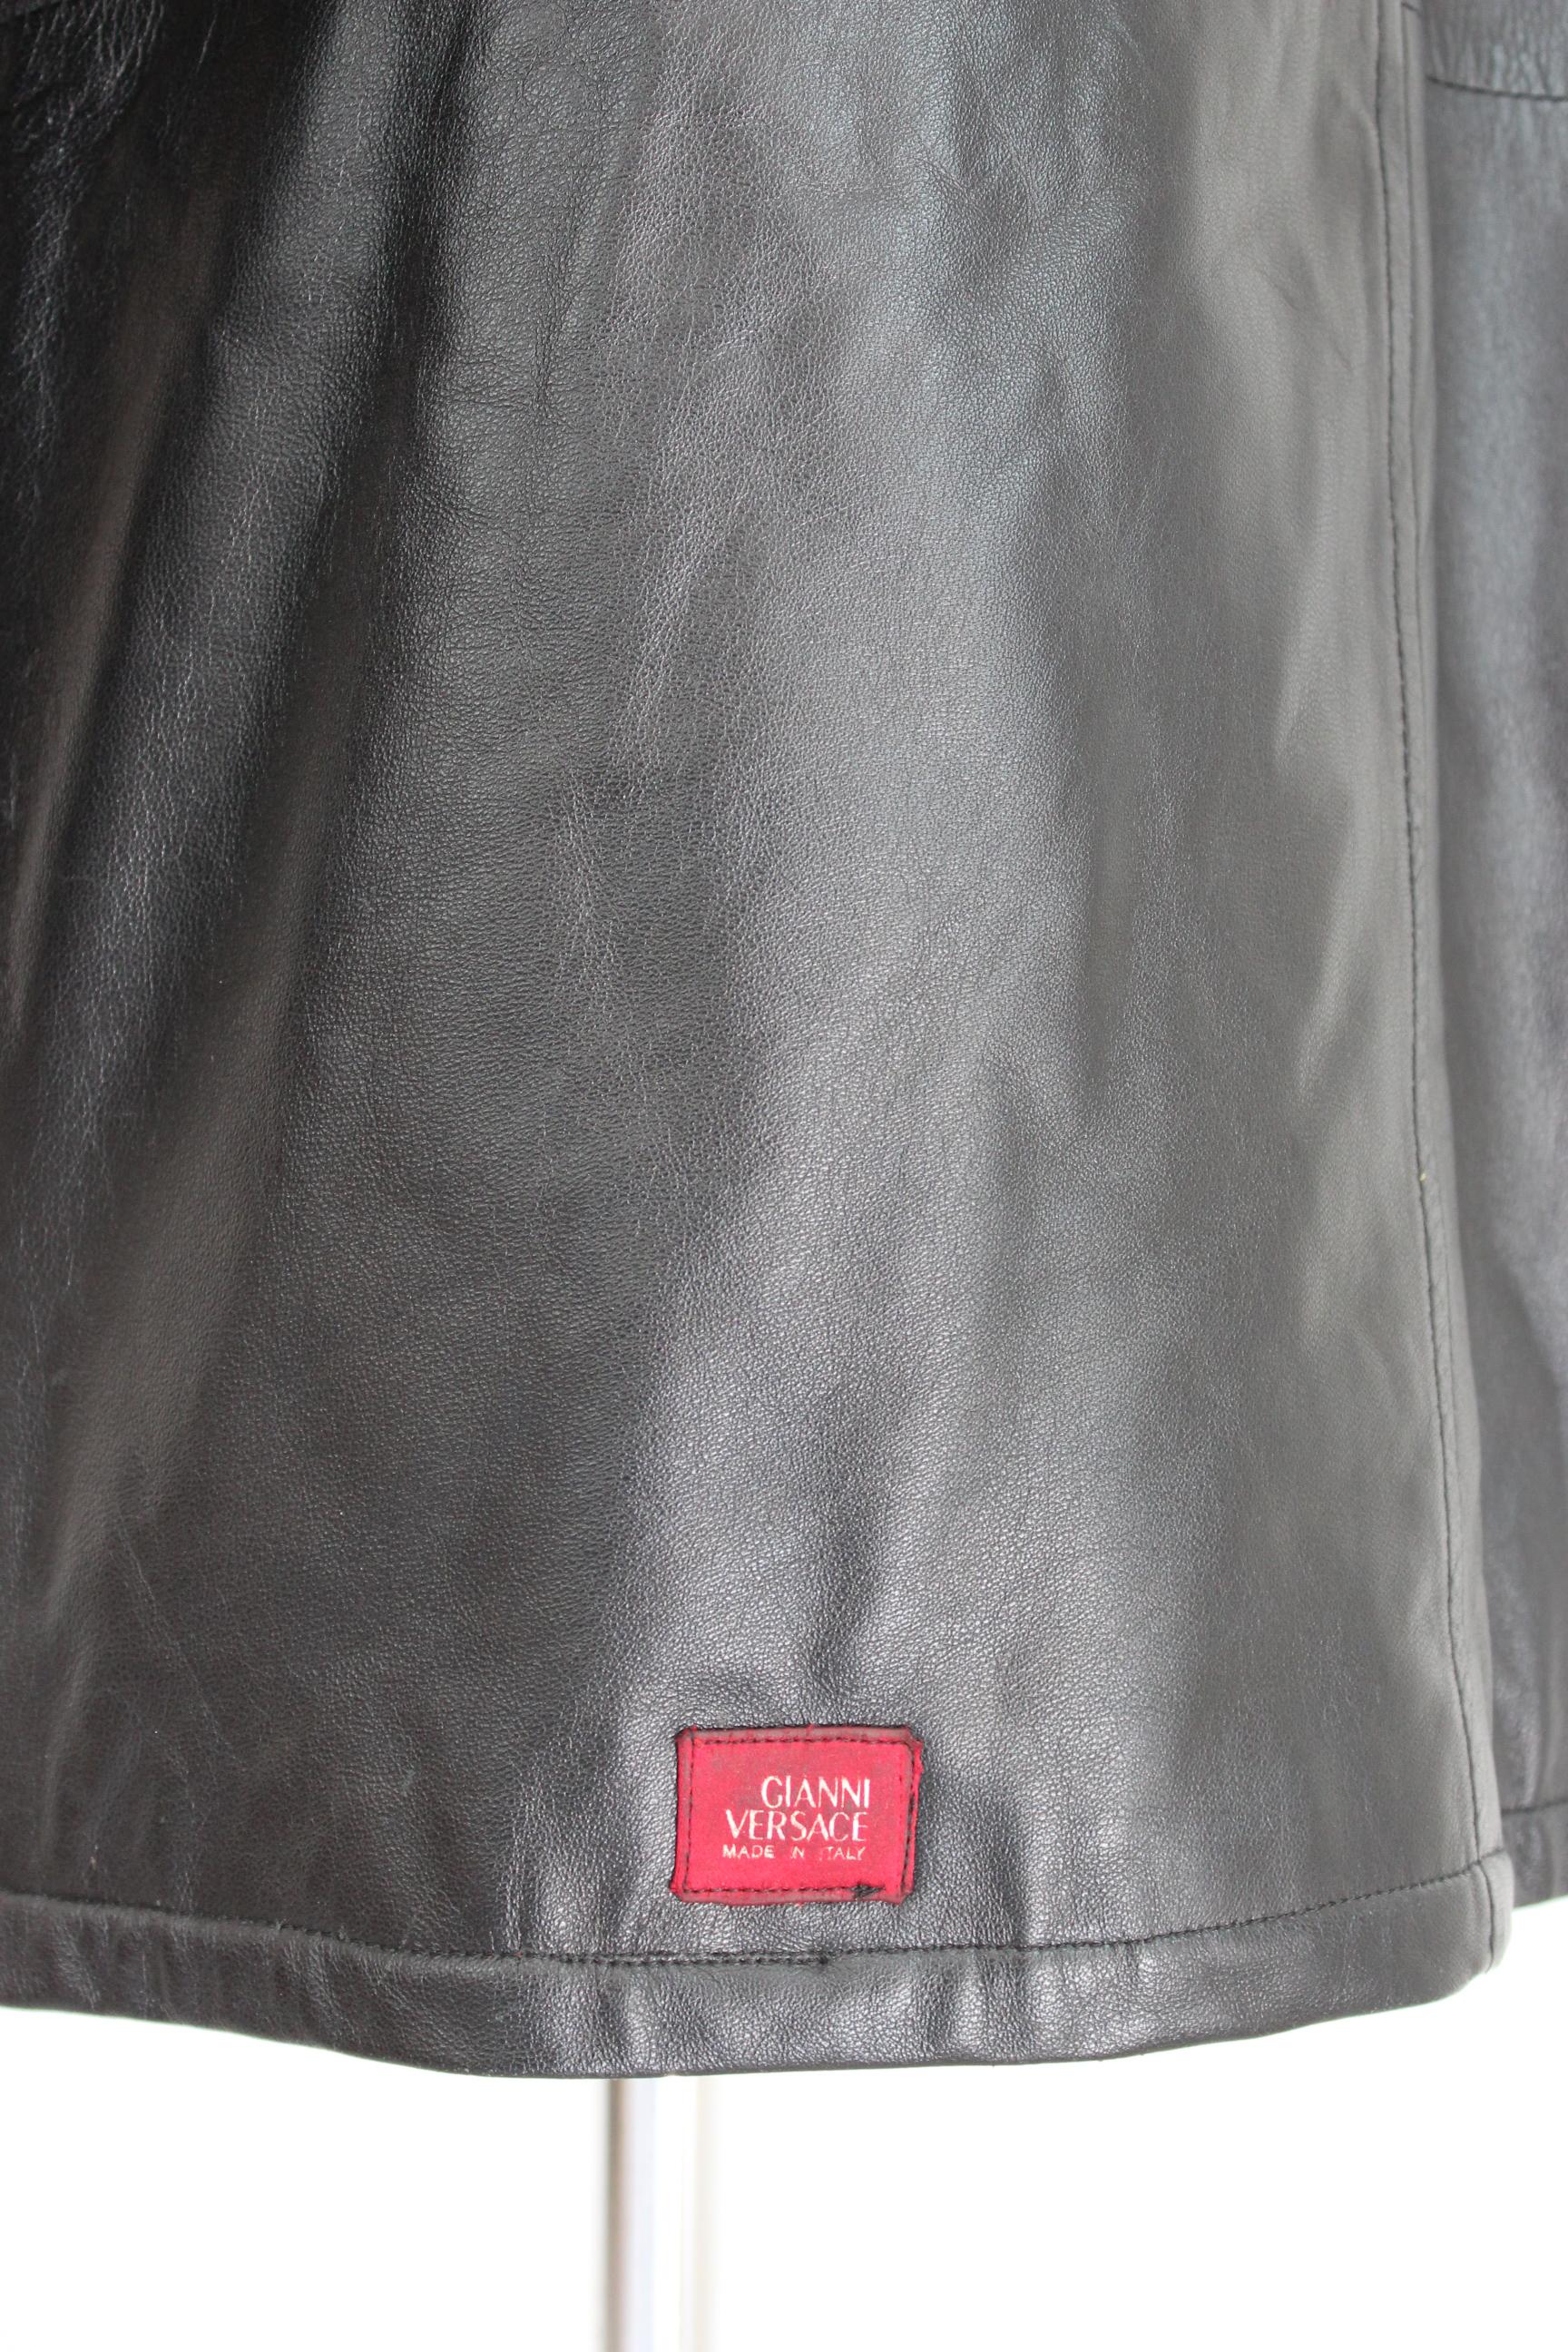 Gianni Versace Black Soft Leather Long Coat 1990s 1